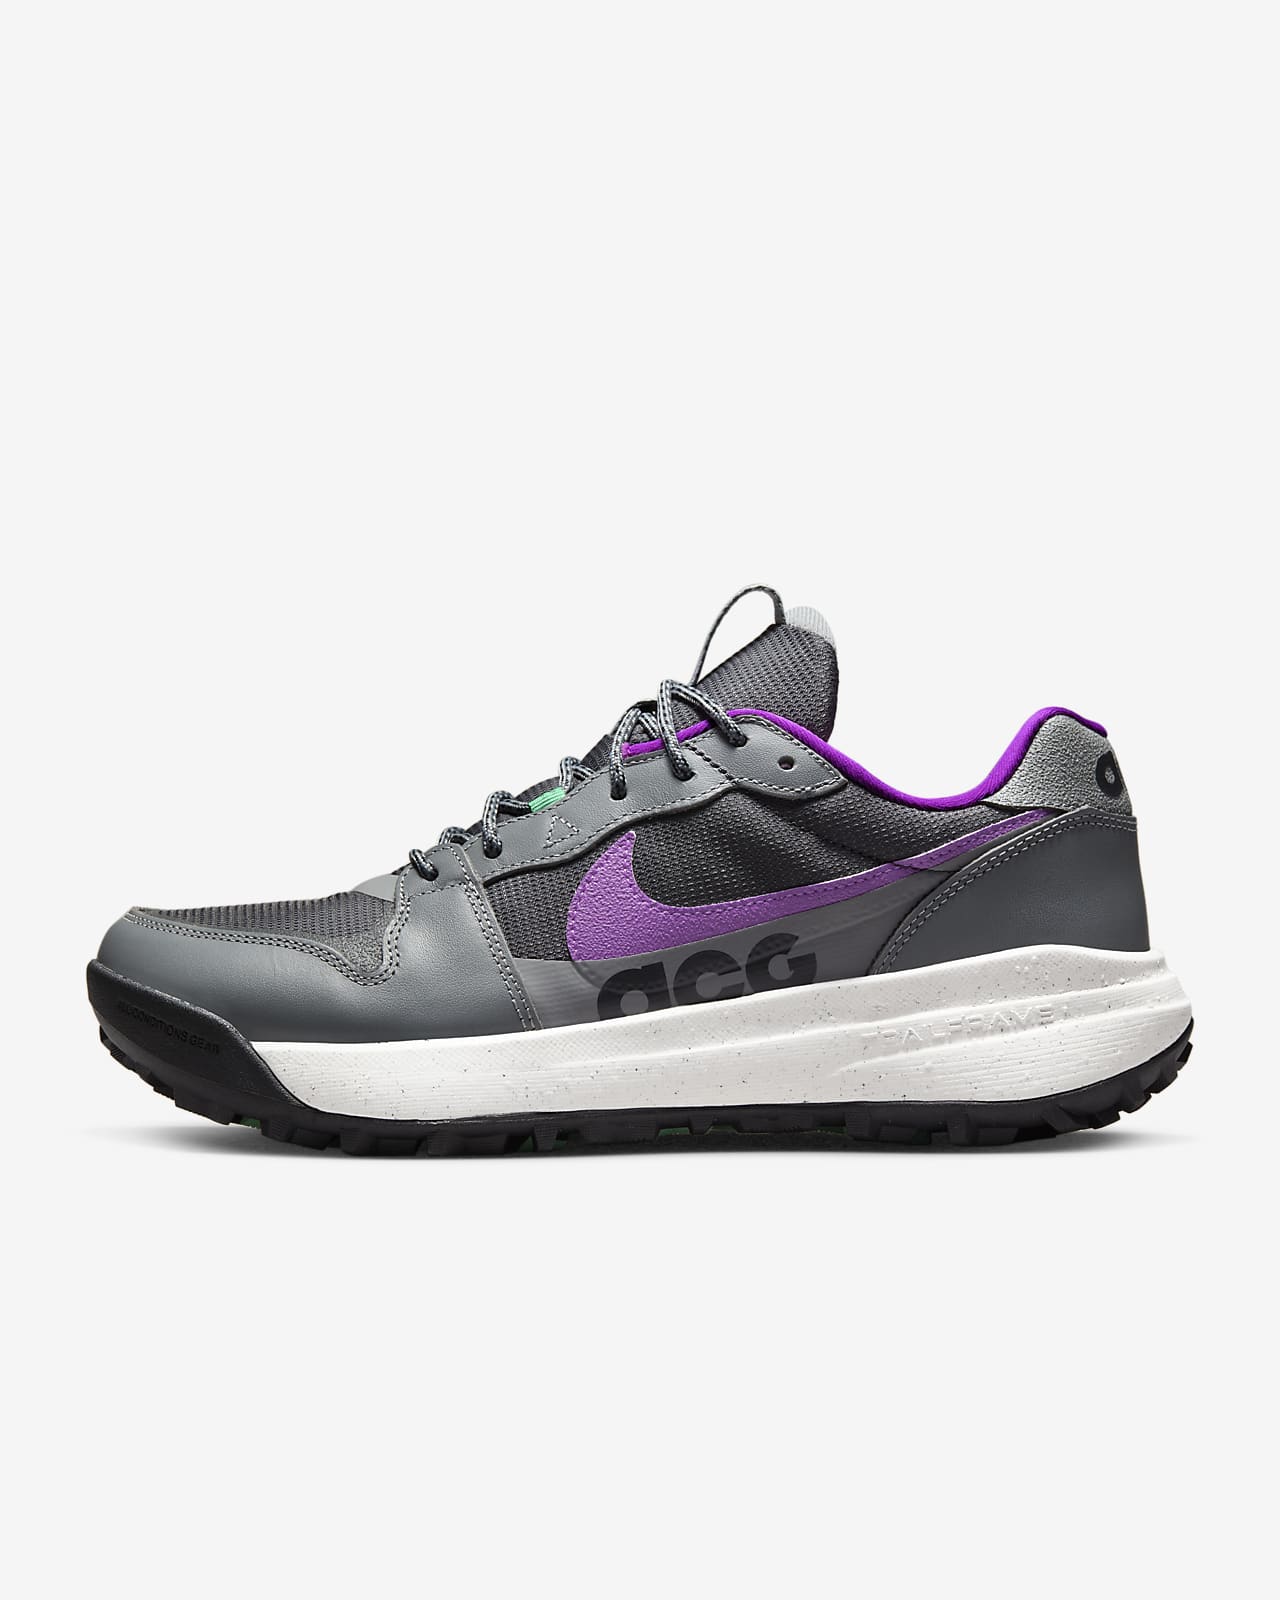 Nike ACG Lowcate “Vivid Purple”